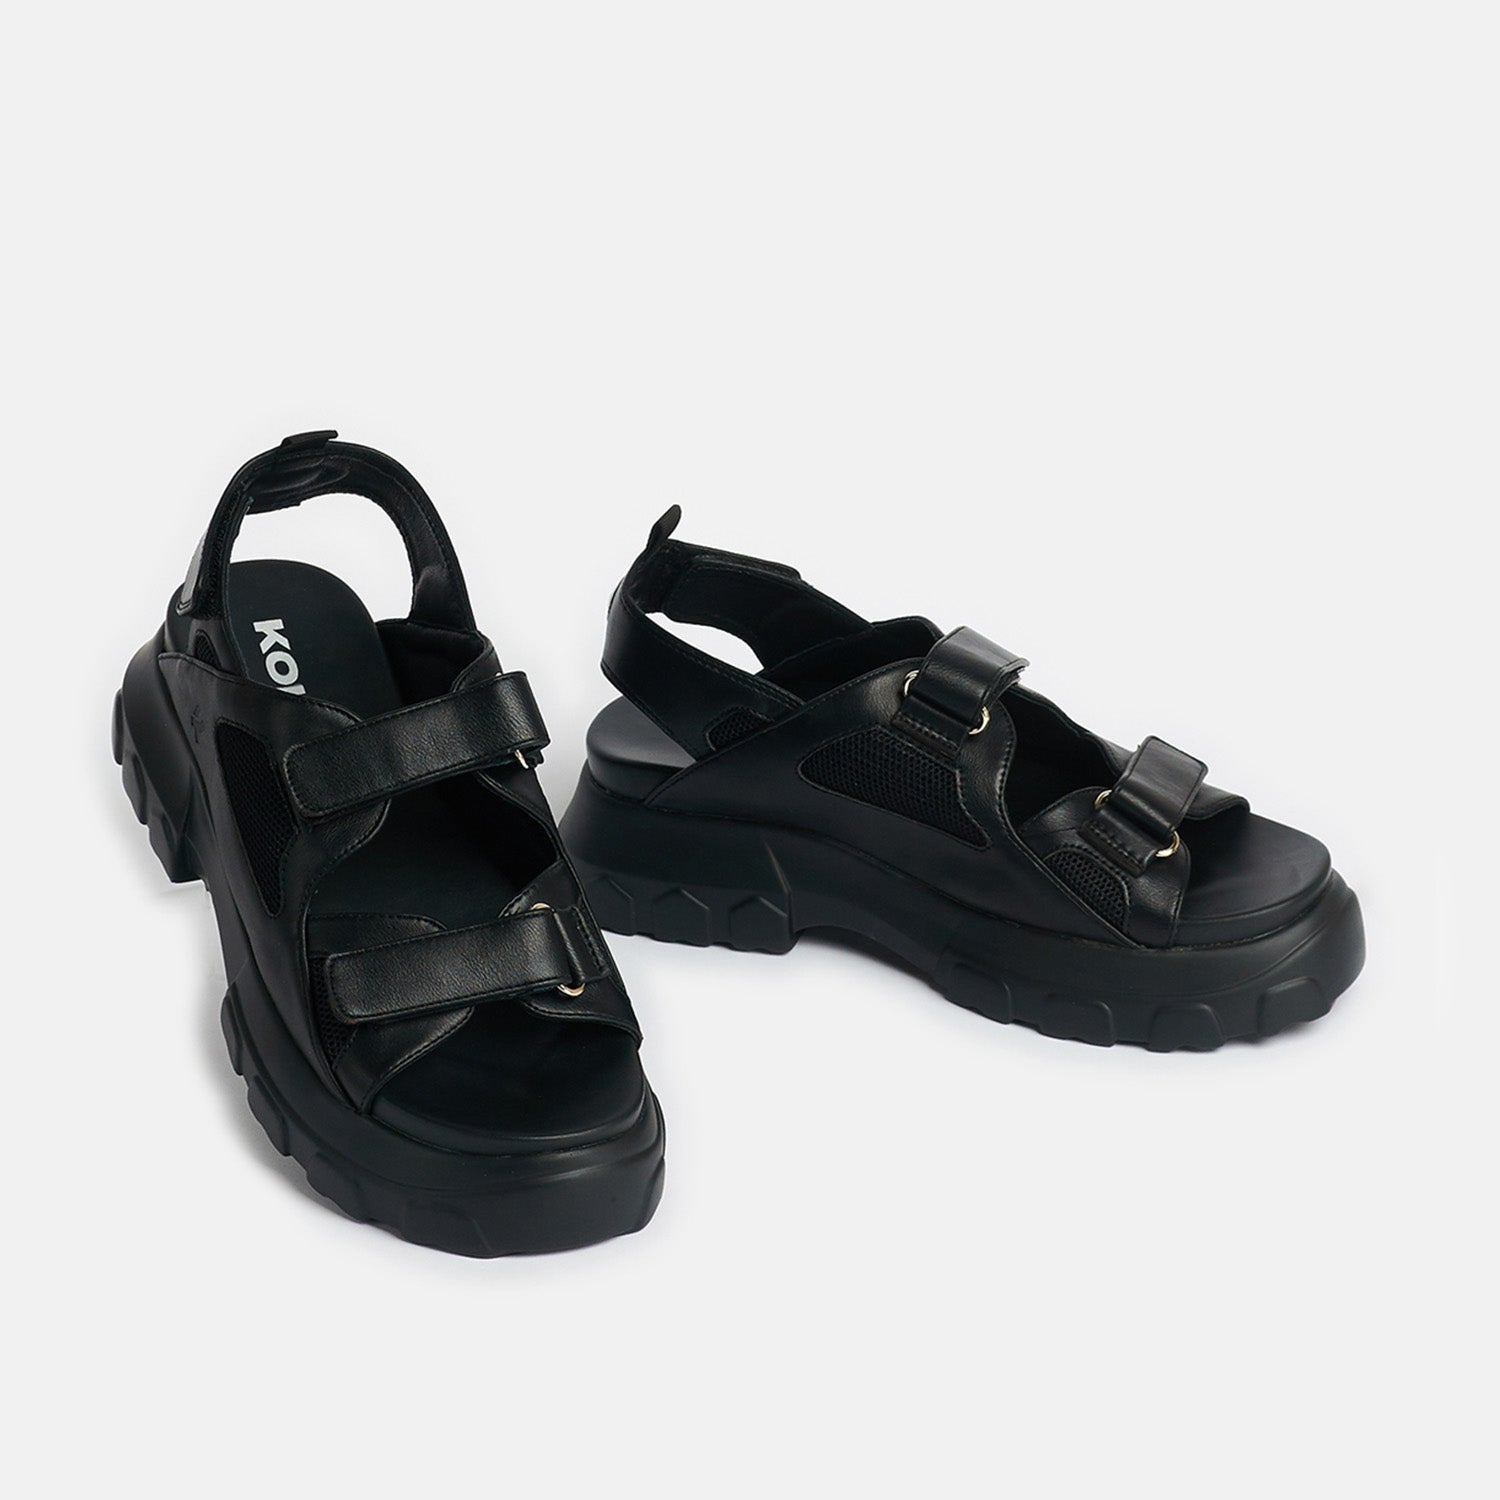 Fated Love Black Chunky Sandals - Sandals - KOI Footwear - Black - Three-Quarter View